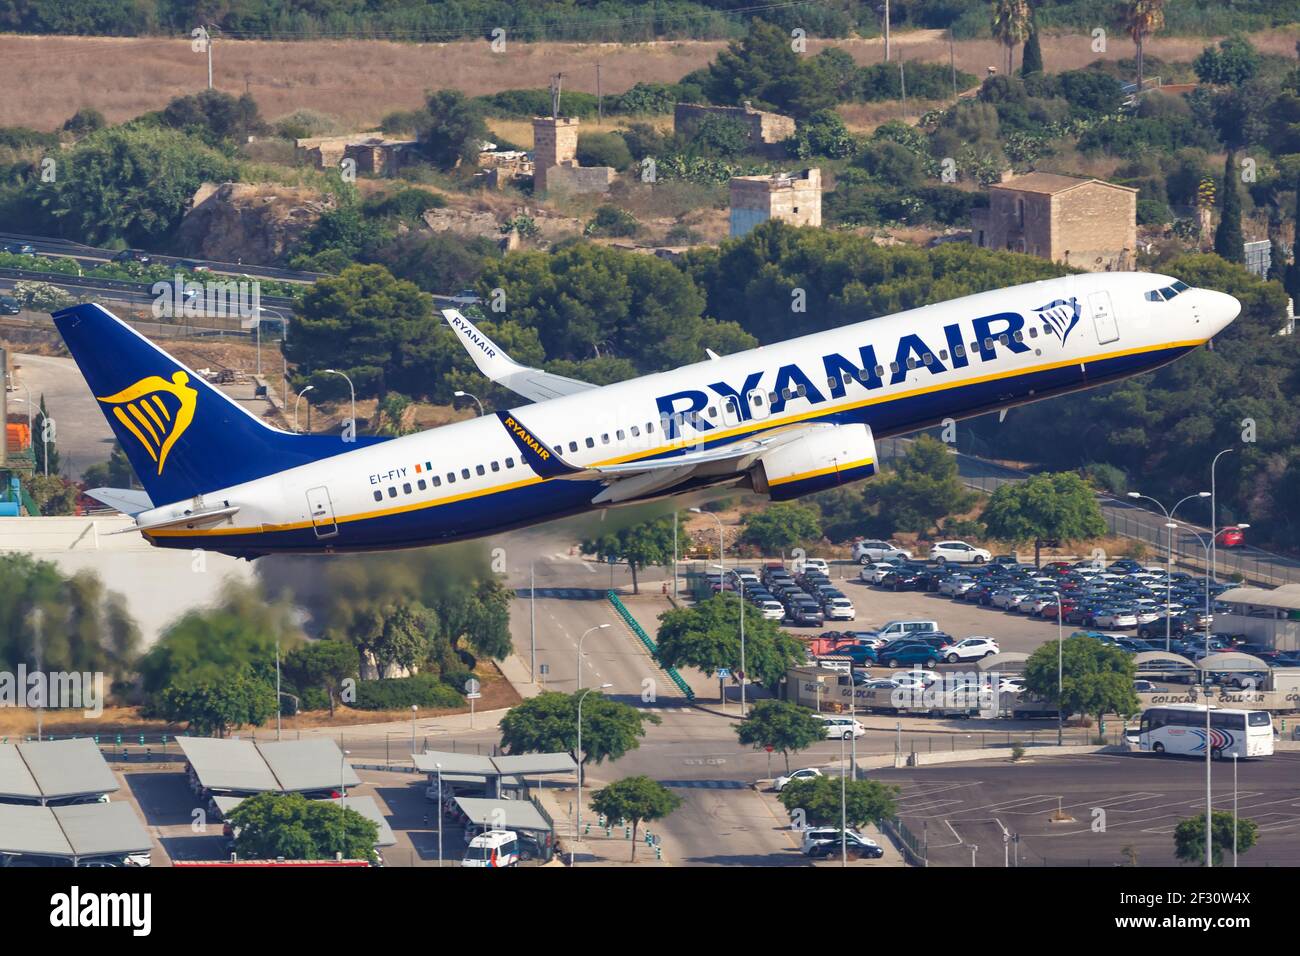 Palma de Mallorca, Spain - July 21, 2018: Aerial photo of a Ryanair Boeing B737-800 airplane at Palma de Mallorca airport in Spain. Stock Photo